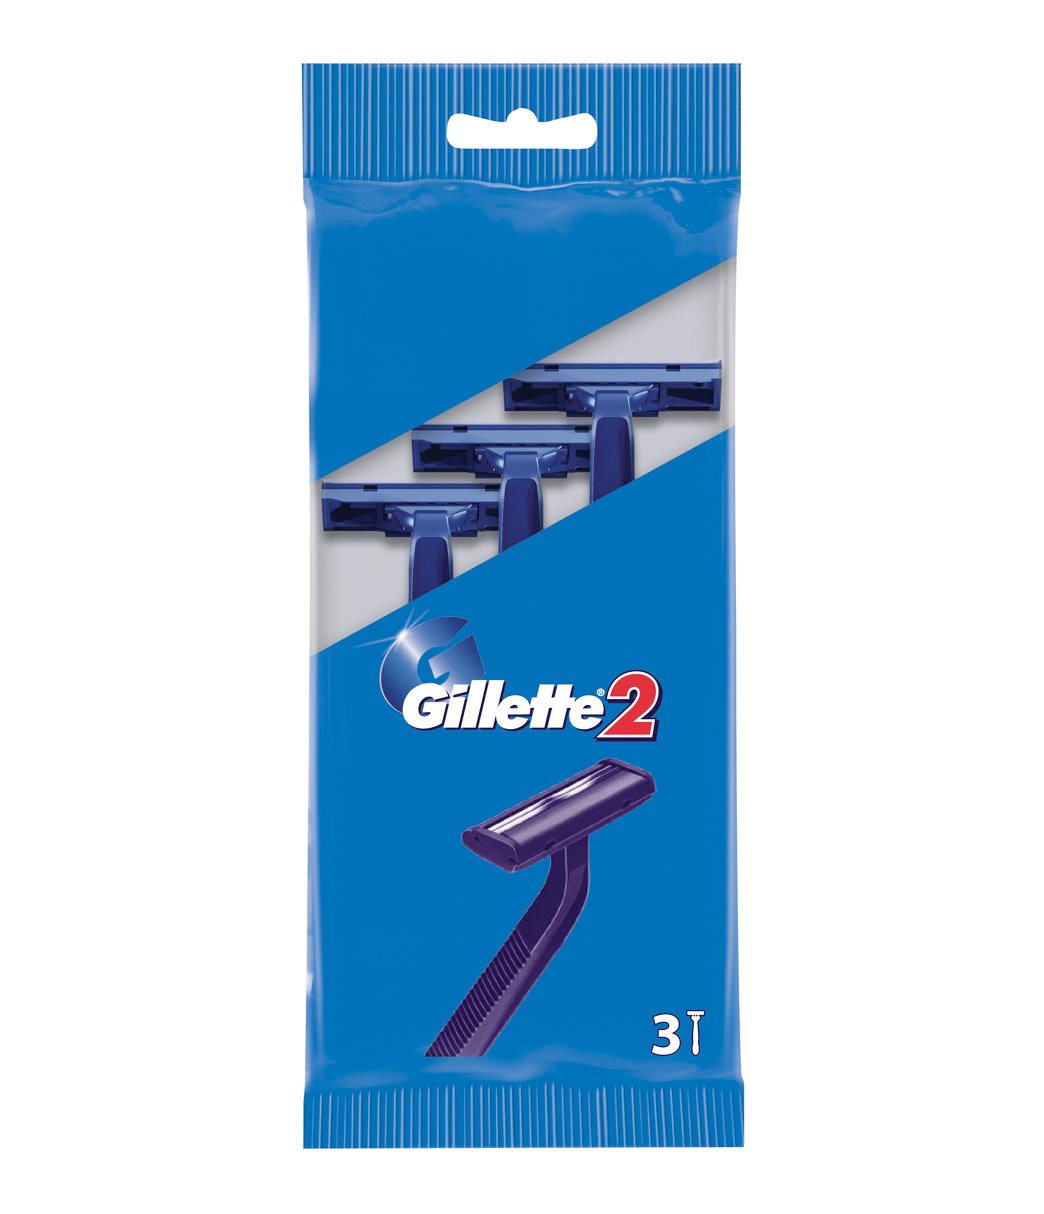 Бритвы одноразовые Gillette 2, 3 шт